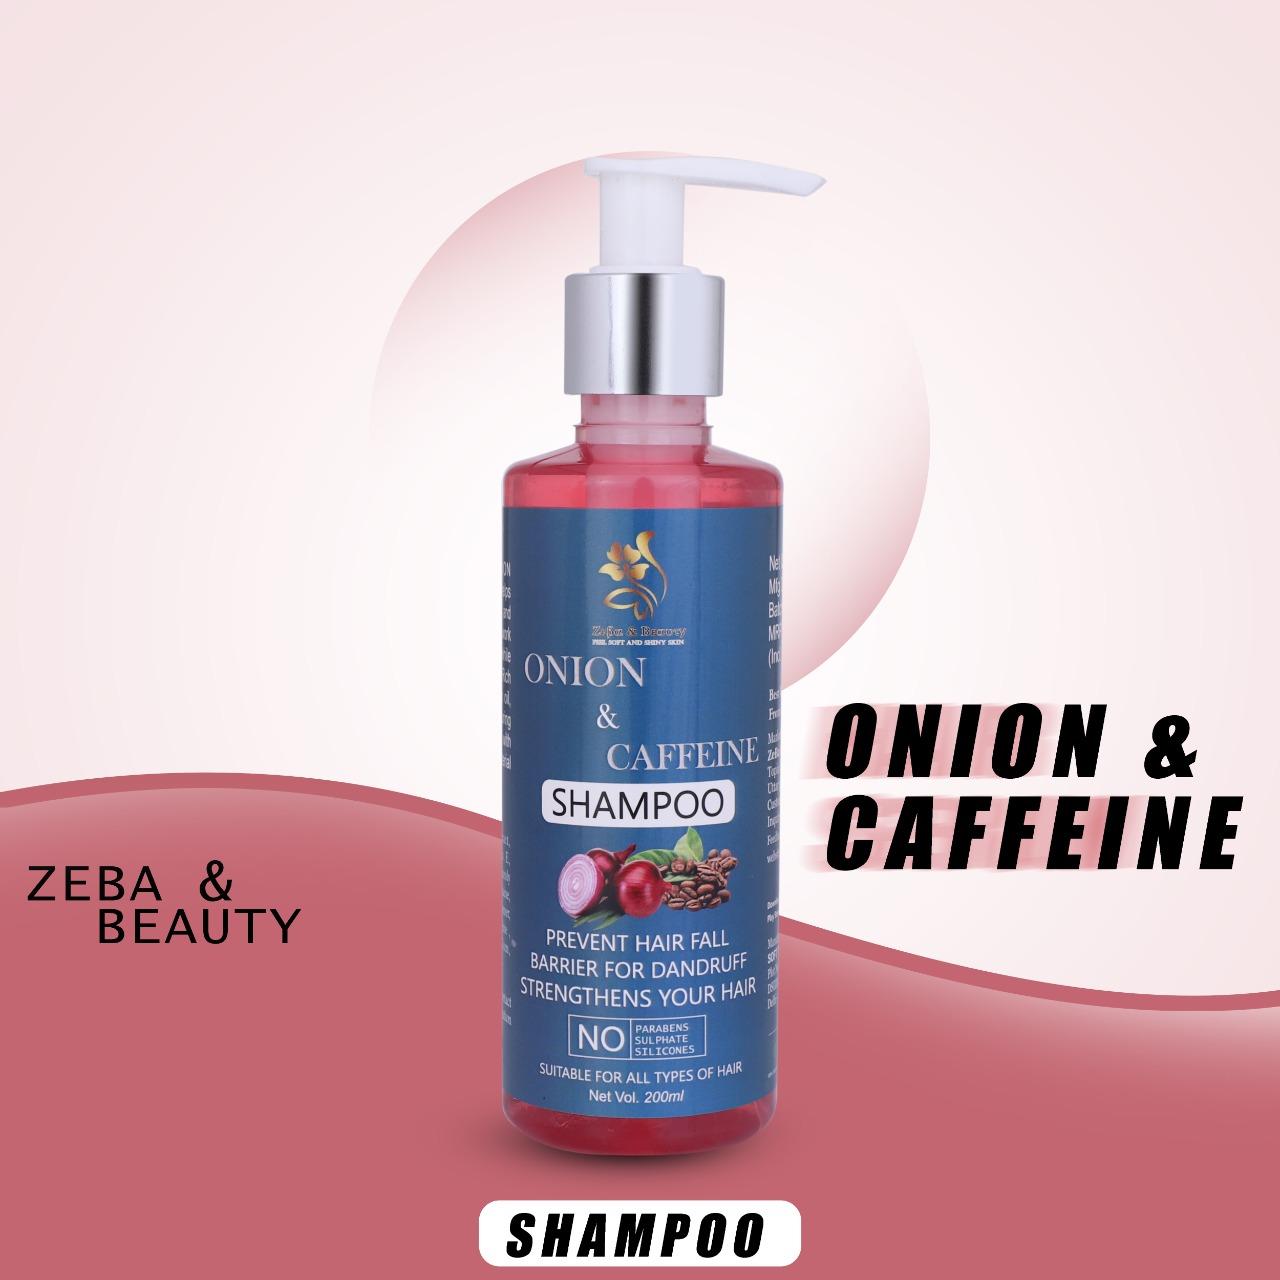 ZEBA & BEAUTY Onion & Caffeine Shampoo Hair Growth